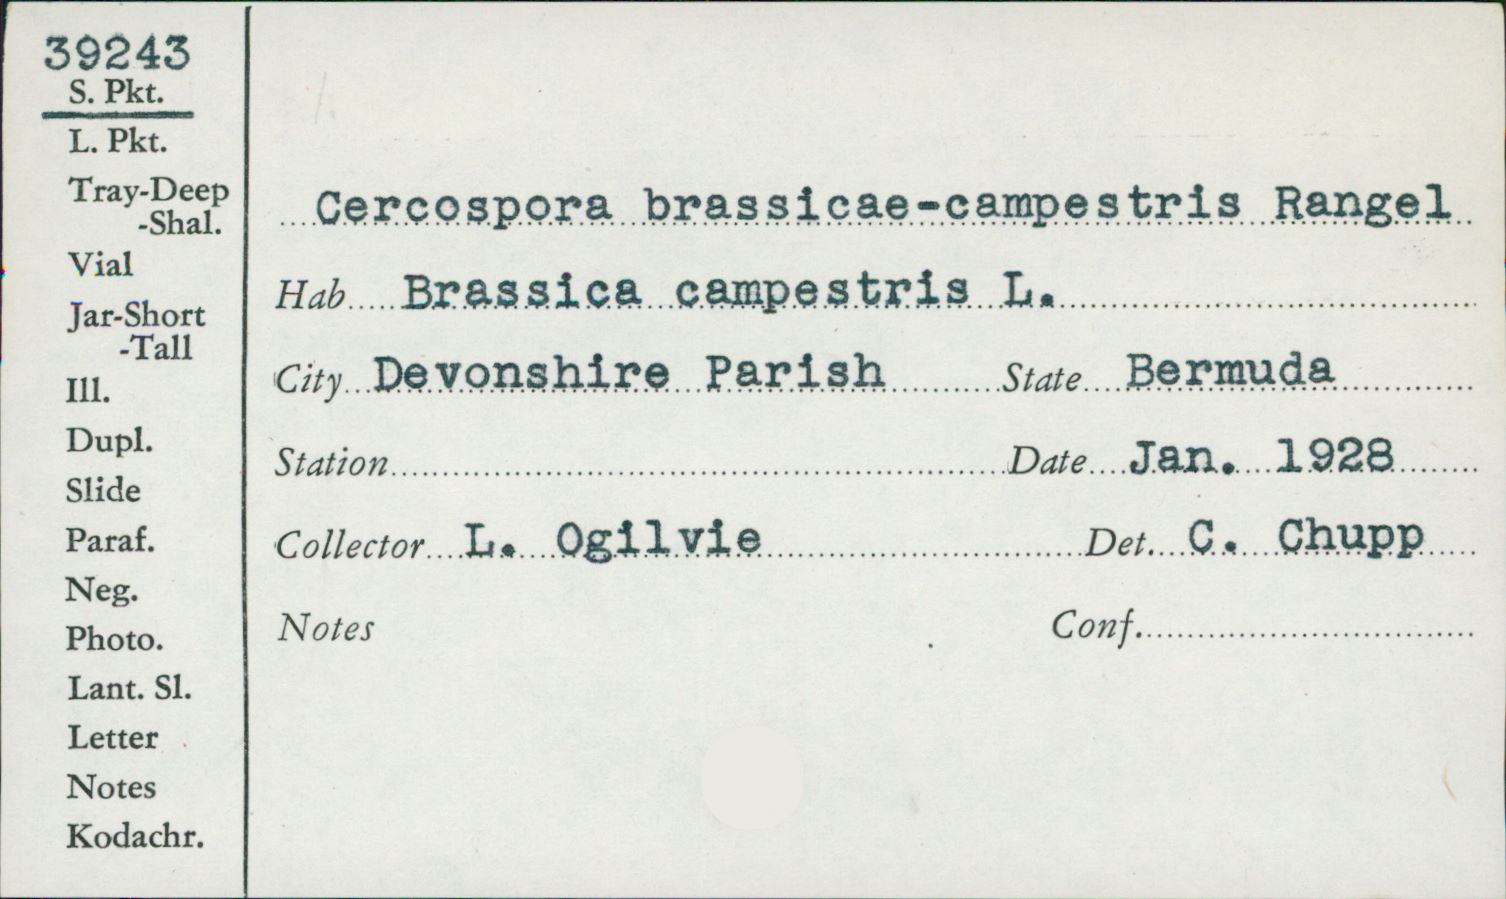 Cercospora brassicae-campestris image